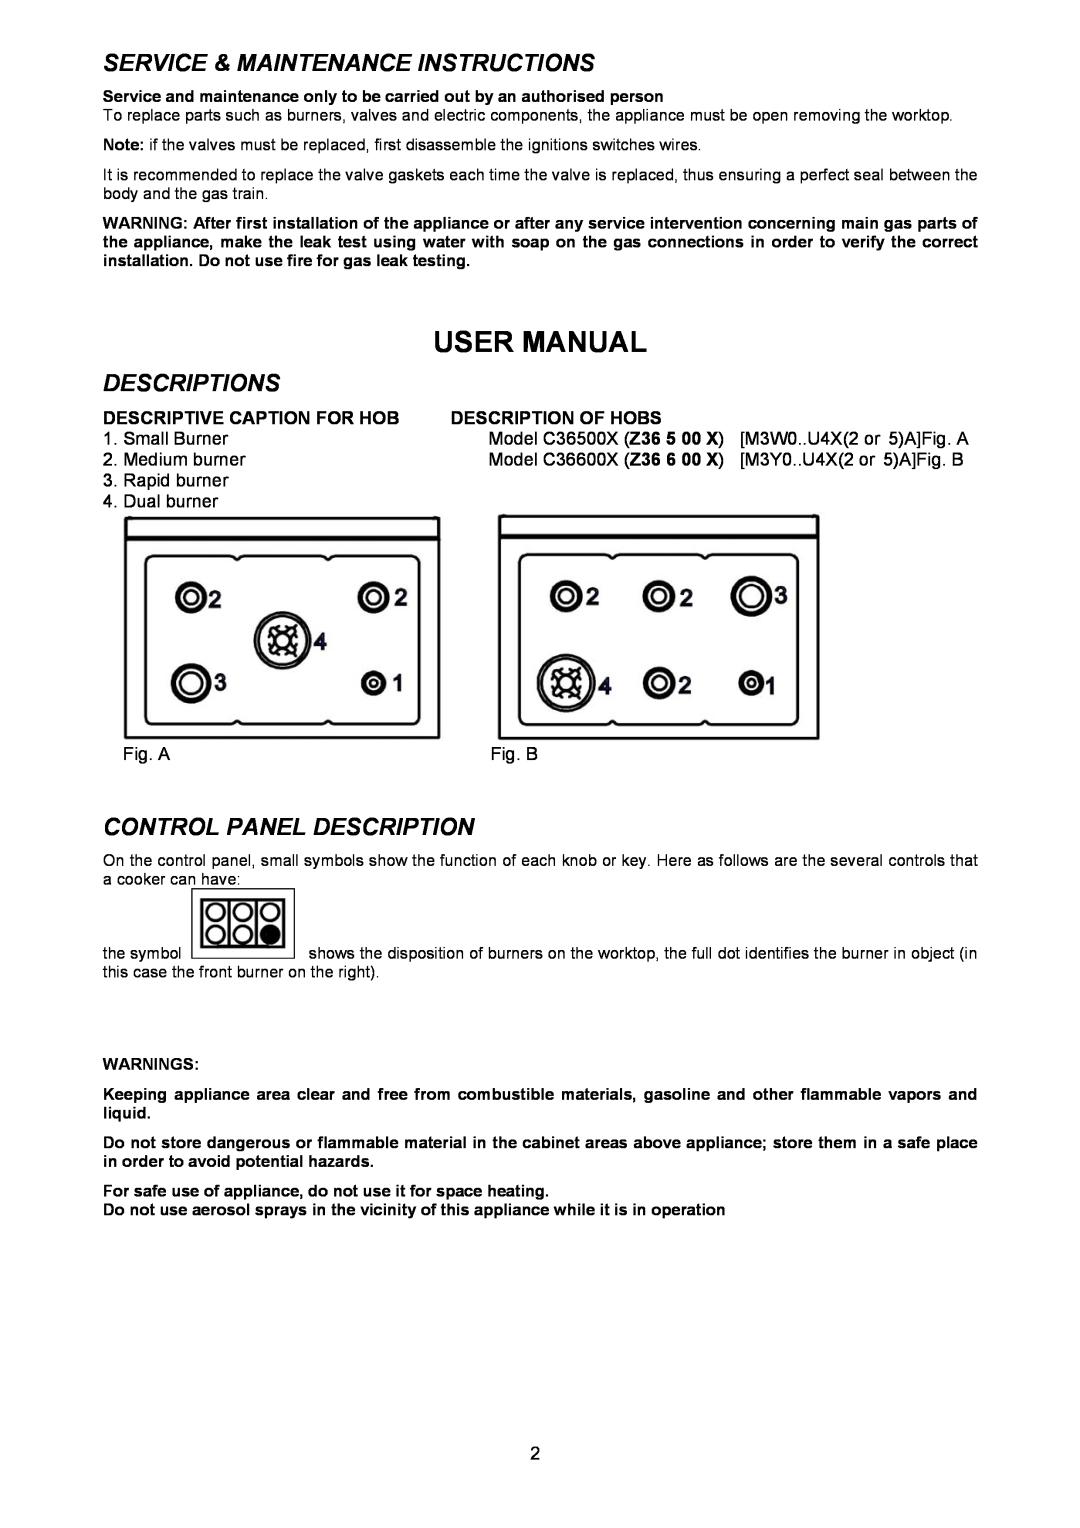 Bertazzoni C36500X, C36600X Service & Maintenance Instructions, Descriptions, Control Panel Description, Small Burner 